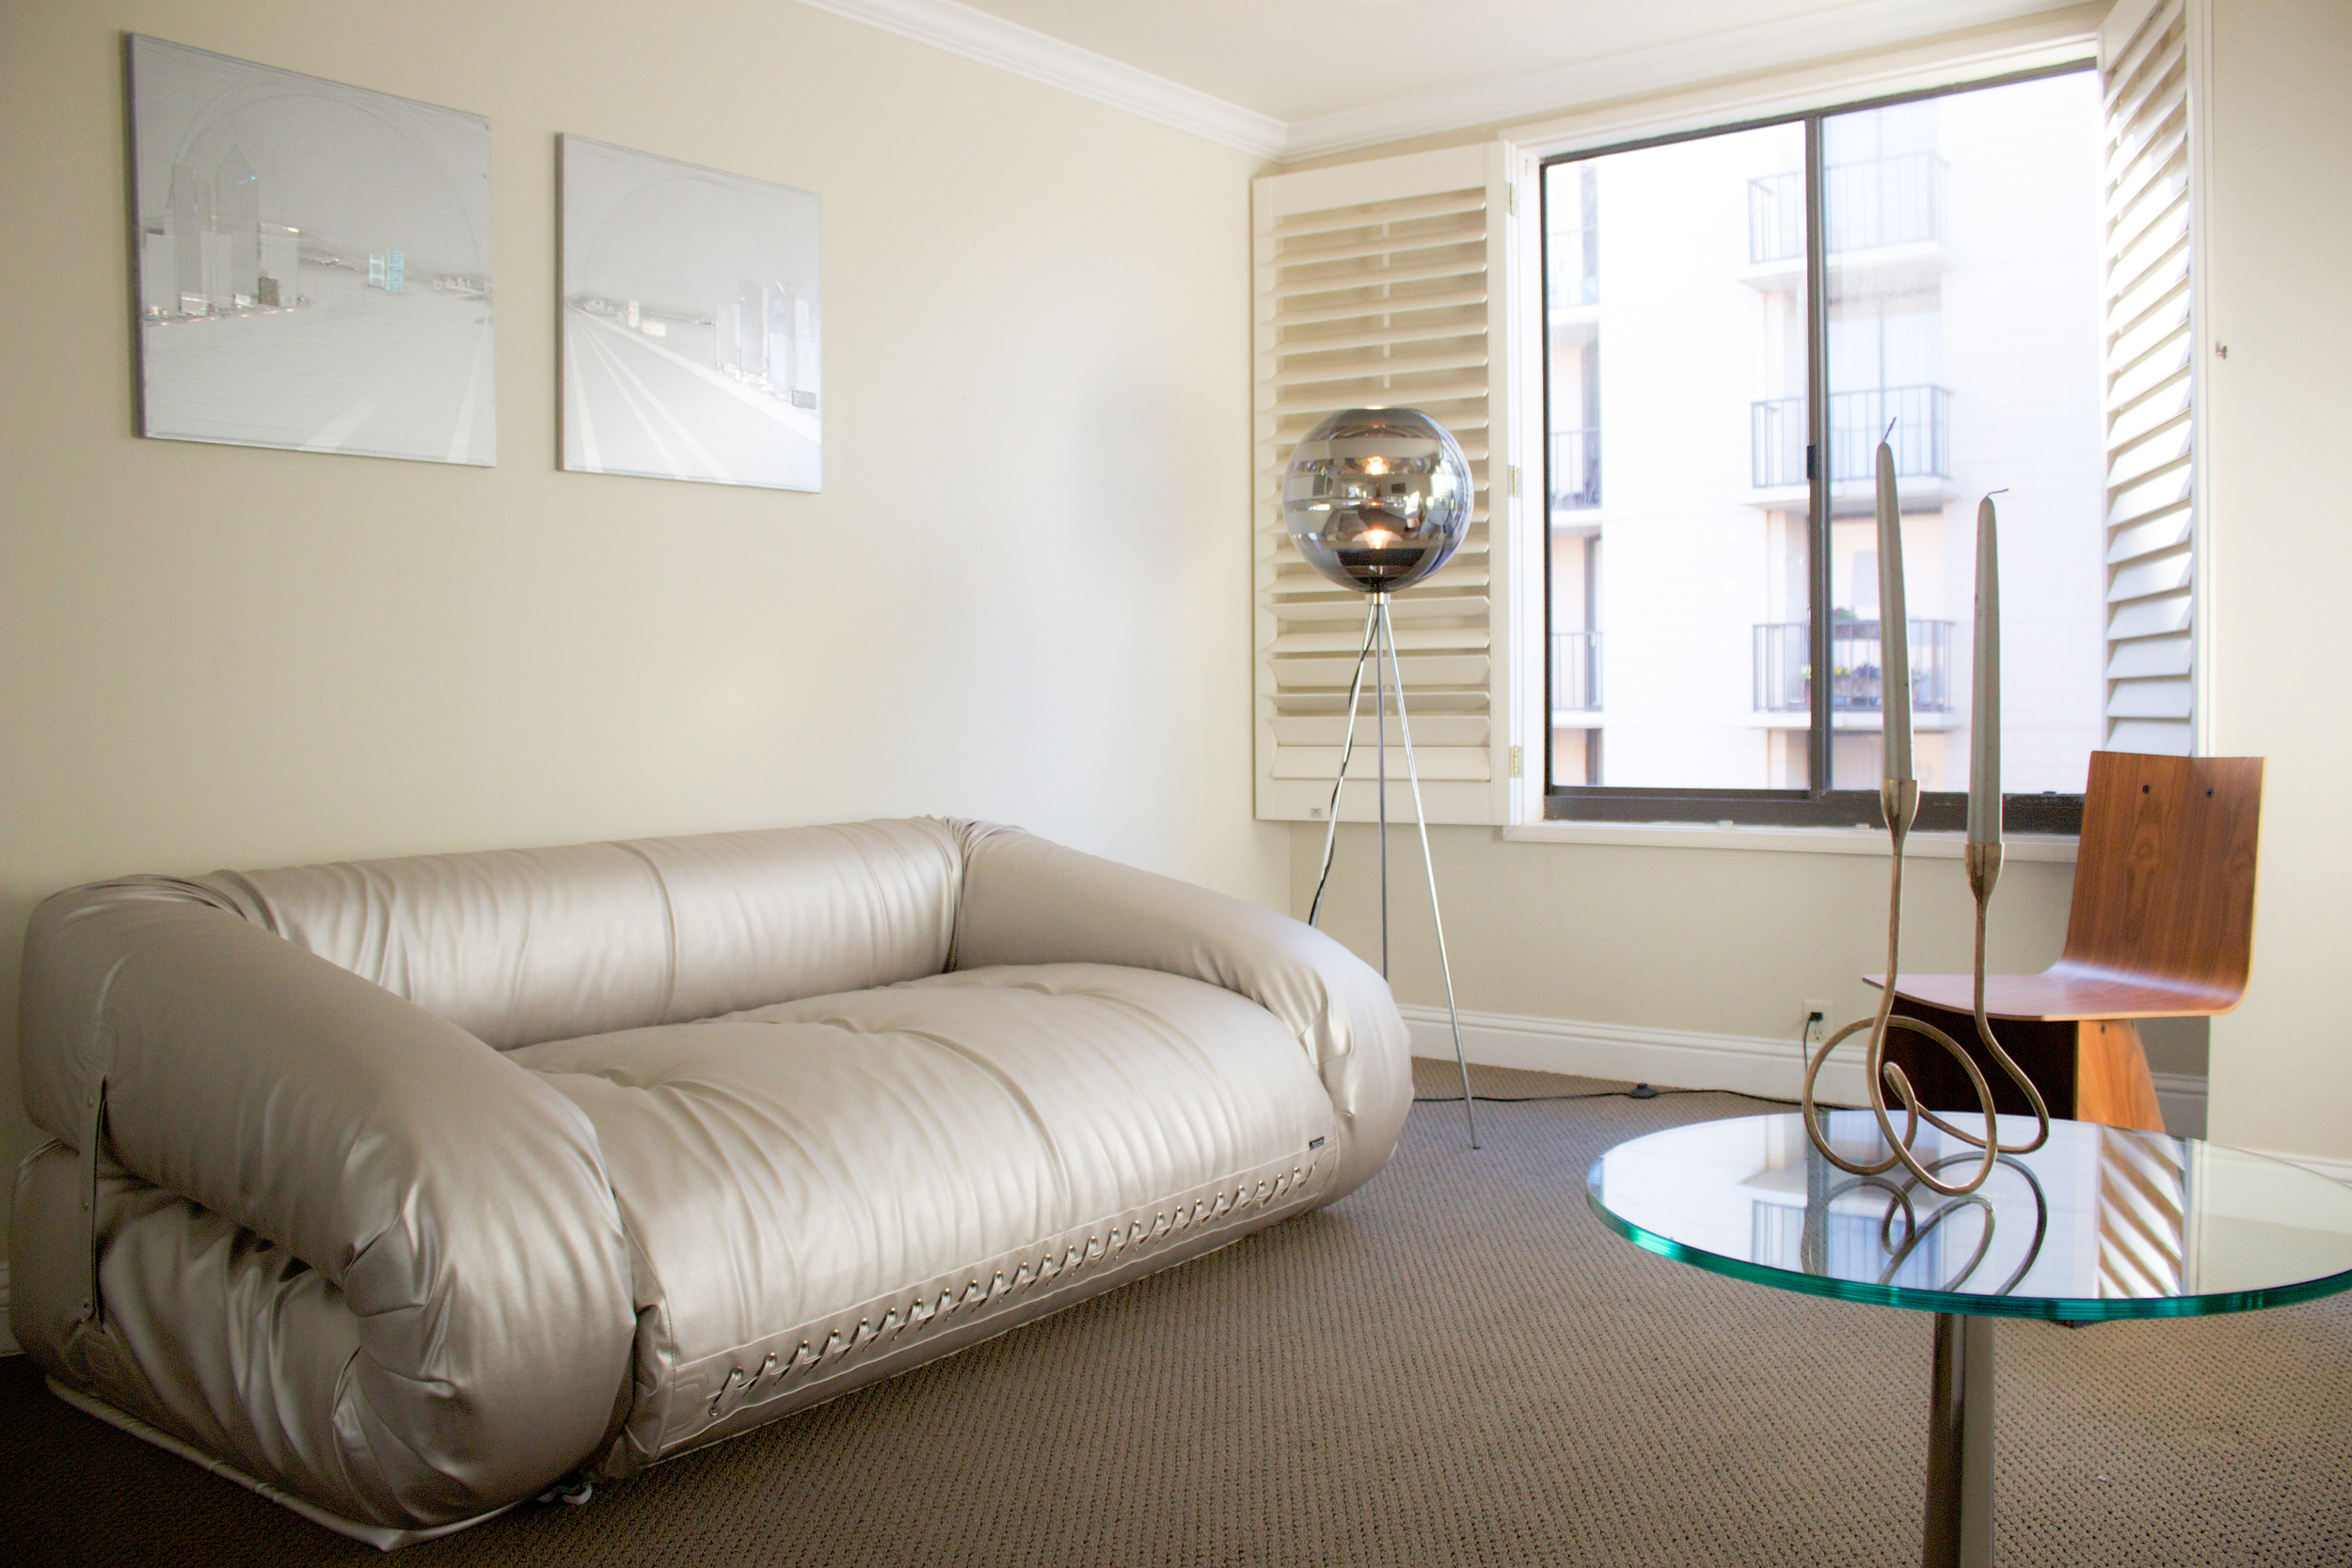  Featuring Giovanetti sofa, VISO Zebra Floor light, Fiam glass side table and ClassiCon chair.&nbsp; 